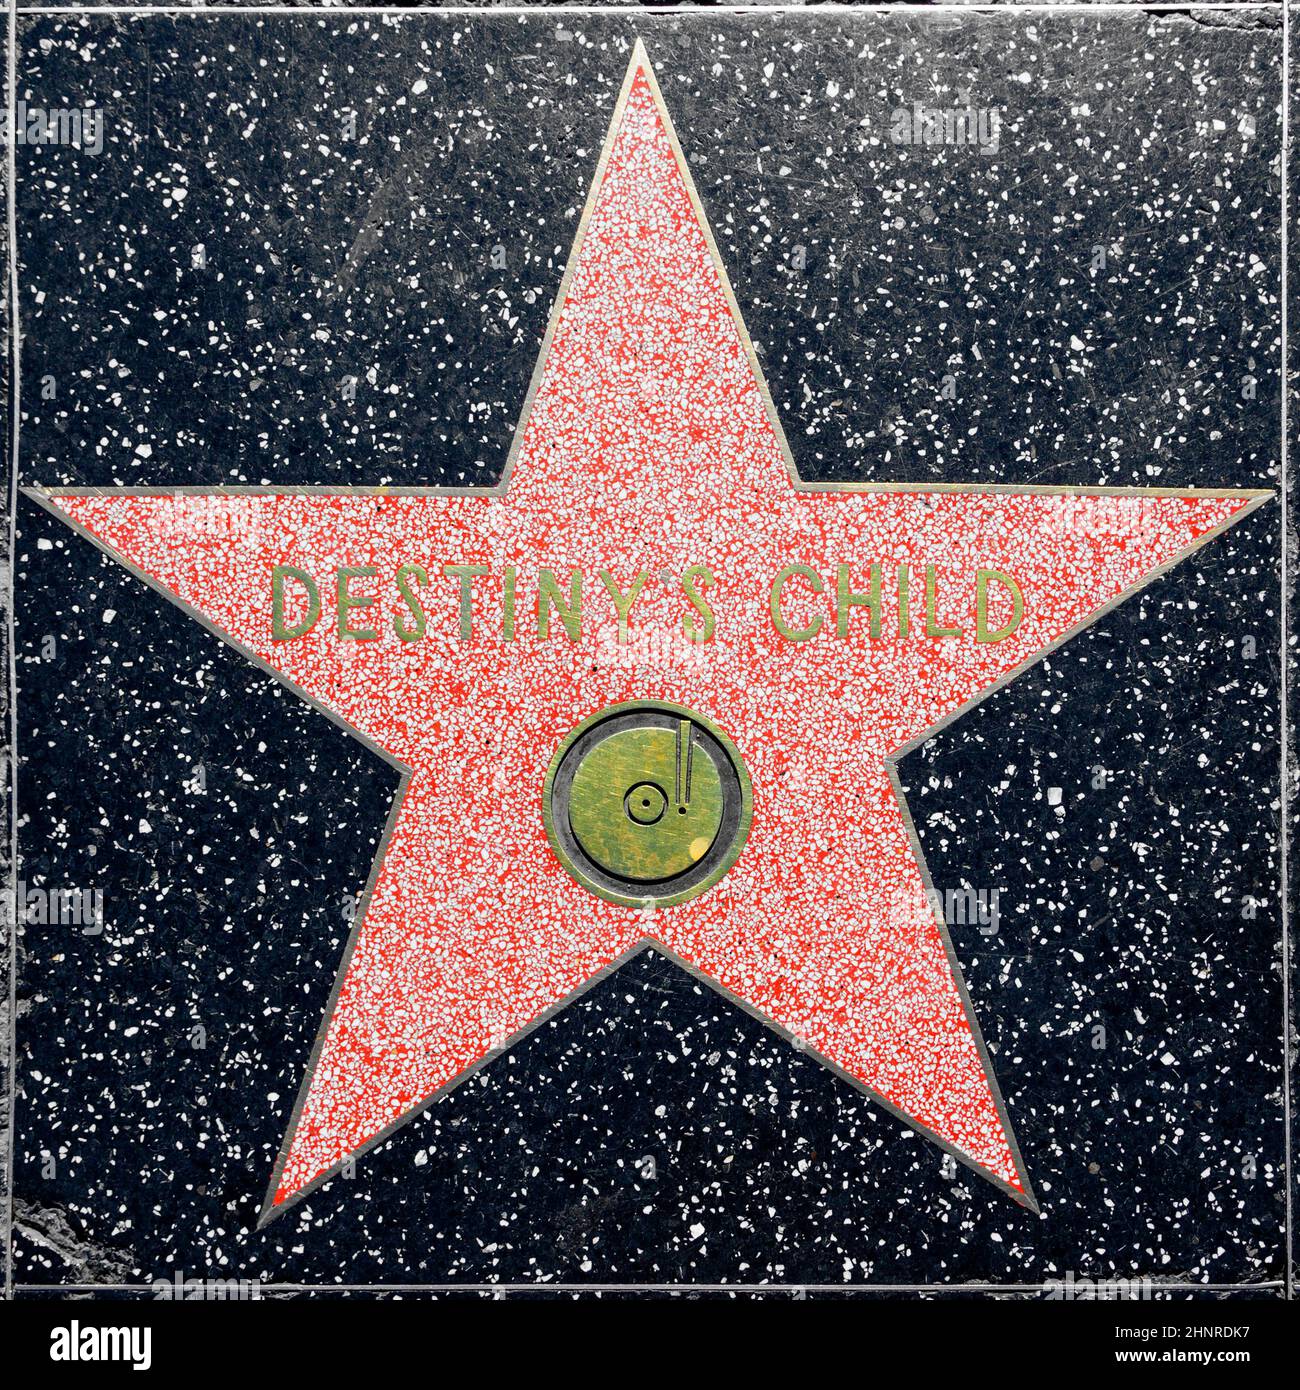 Destiny Child's star on Hollywood Walk of Fame Stock Photo